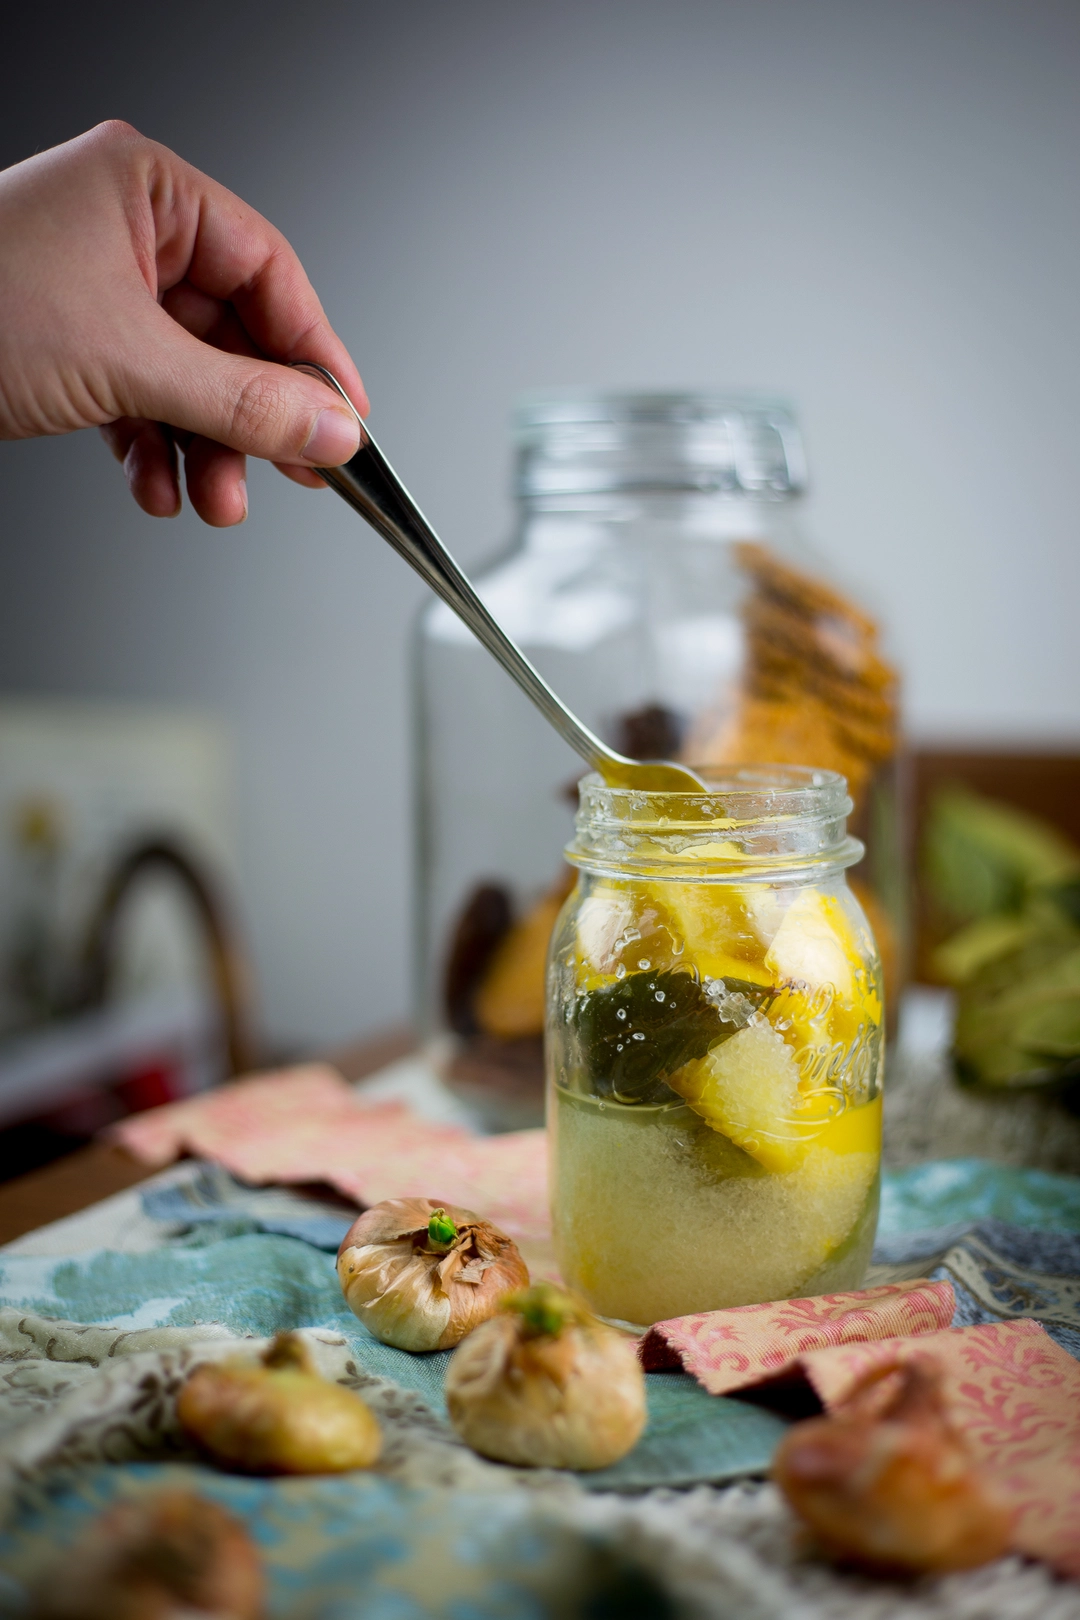 Recipe: Salt-flavored lemons